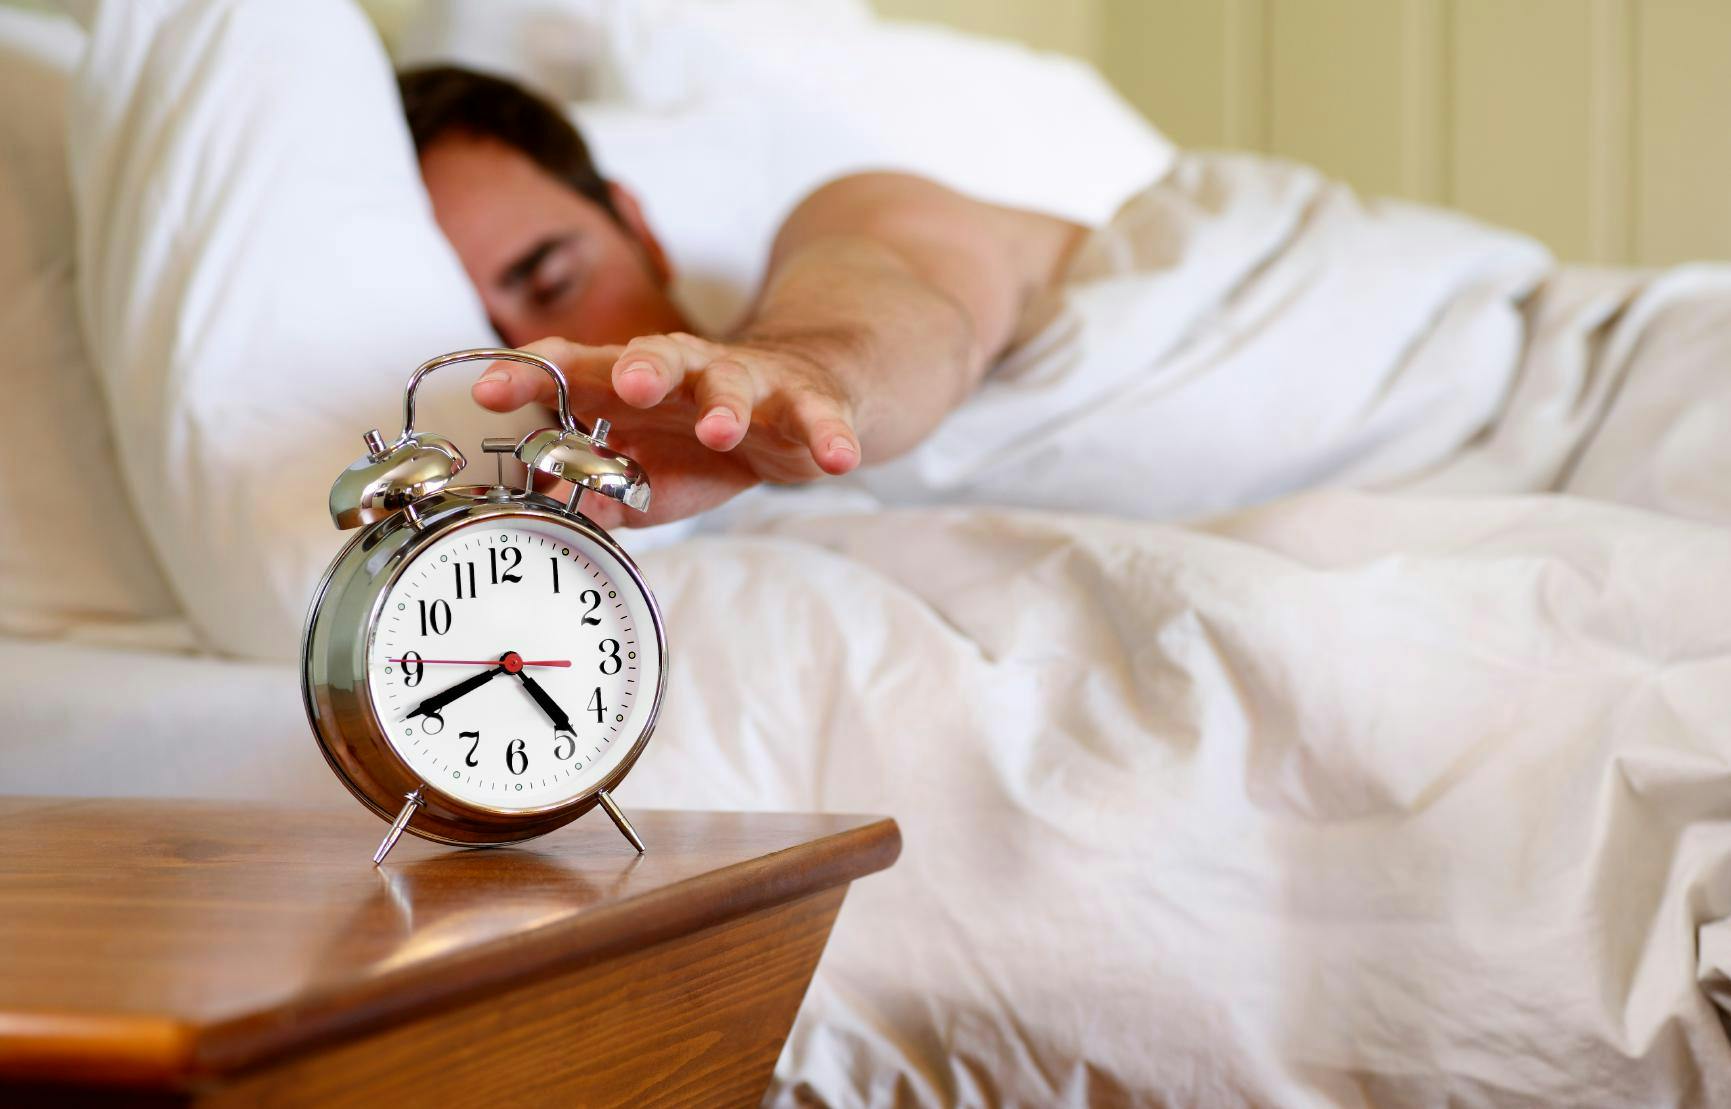 Man reaching to hit snooze on his alarm clock.